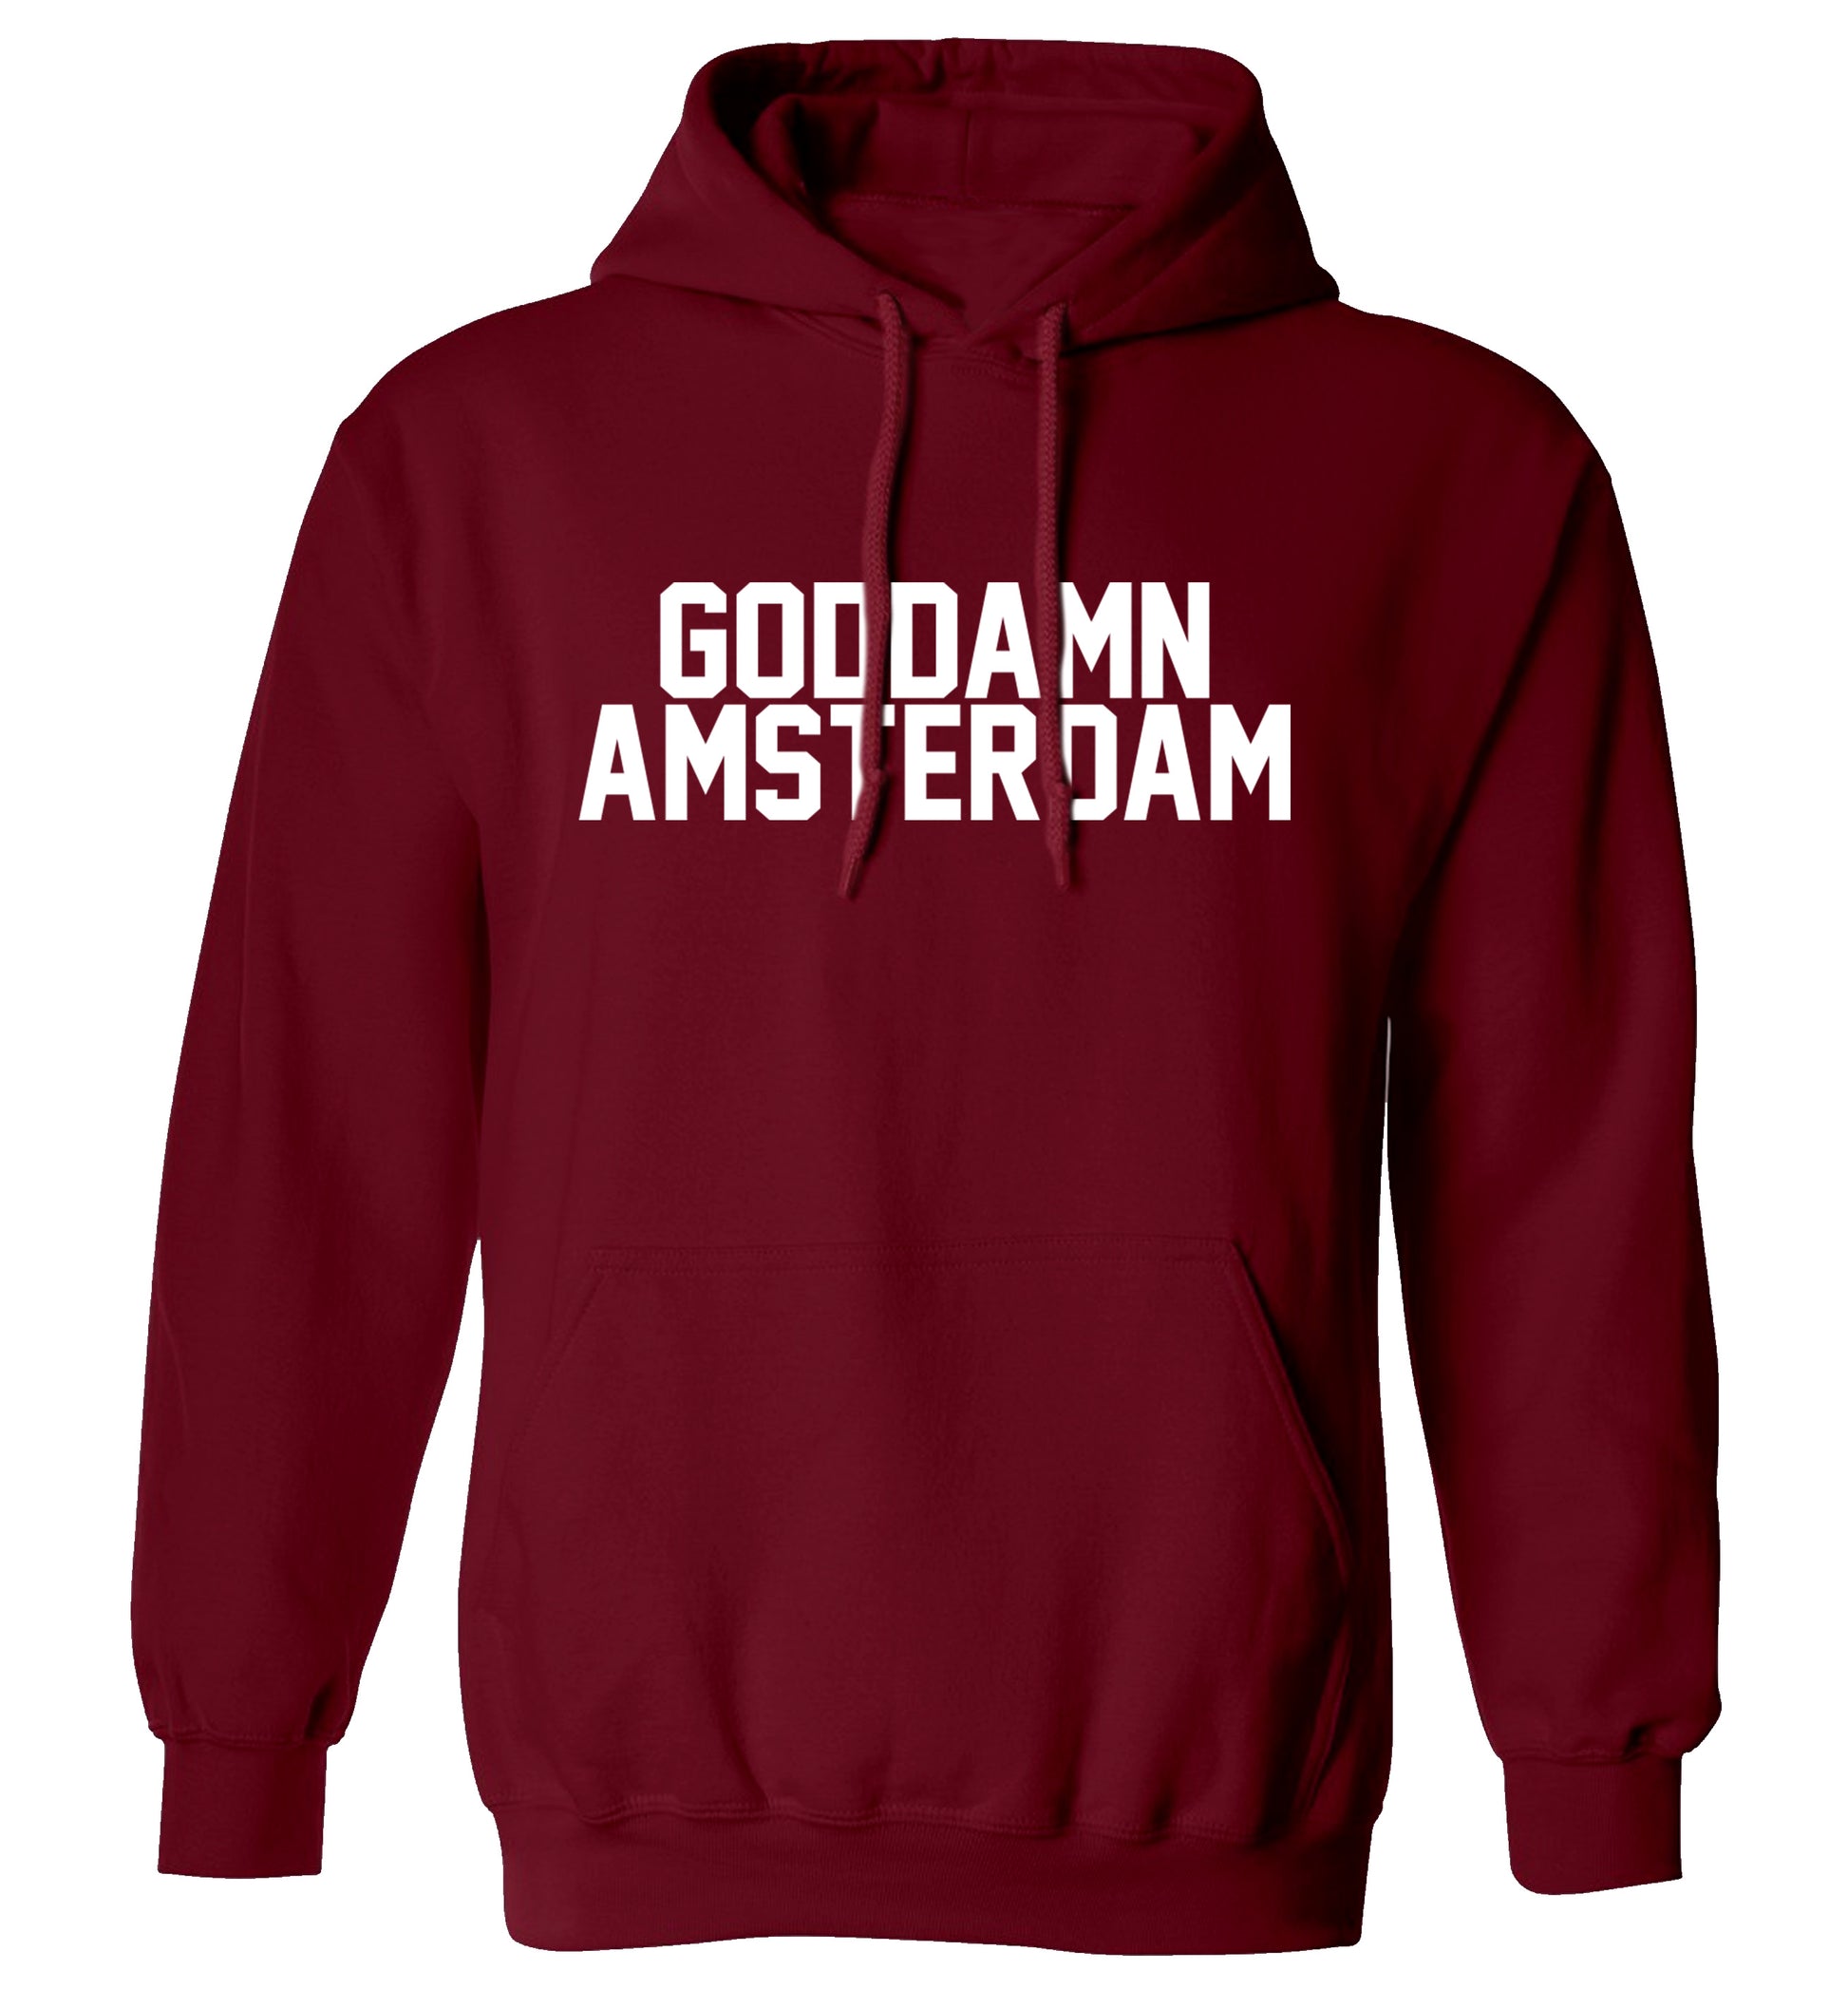 Goddamn Amsterdam adults unisex maroon hoodie 2XL